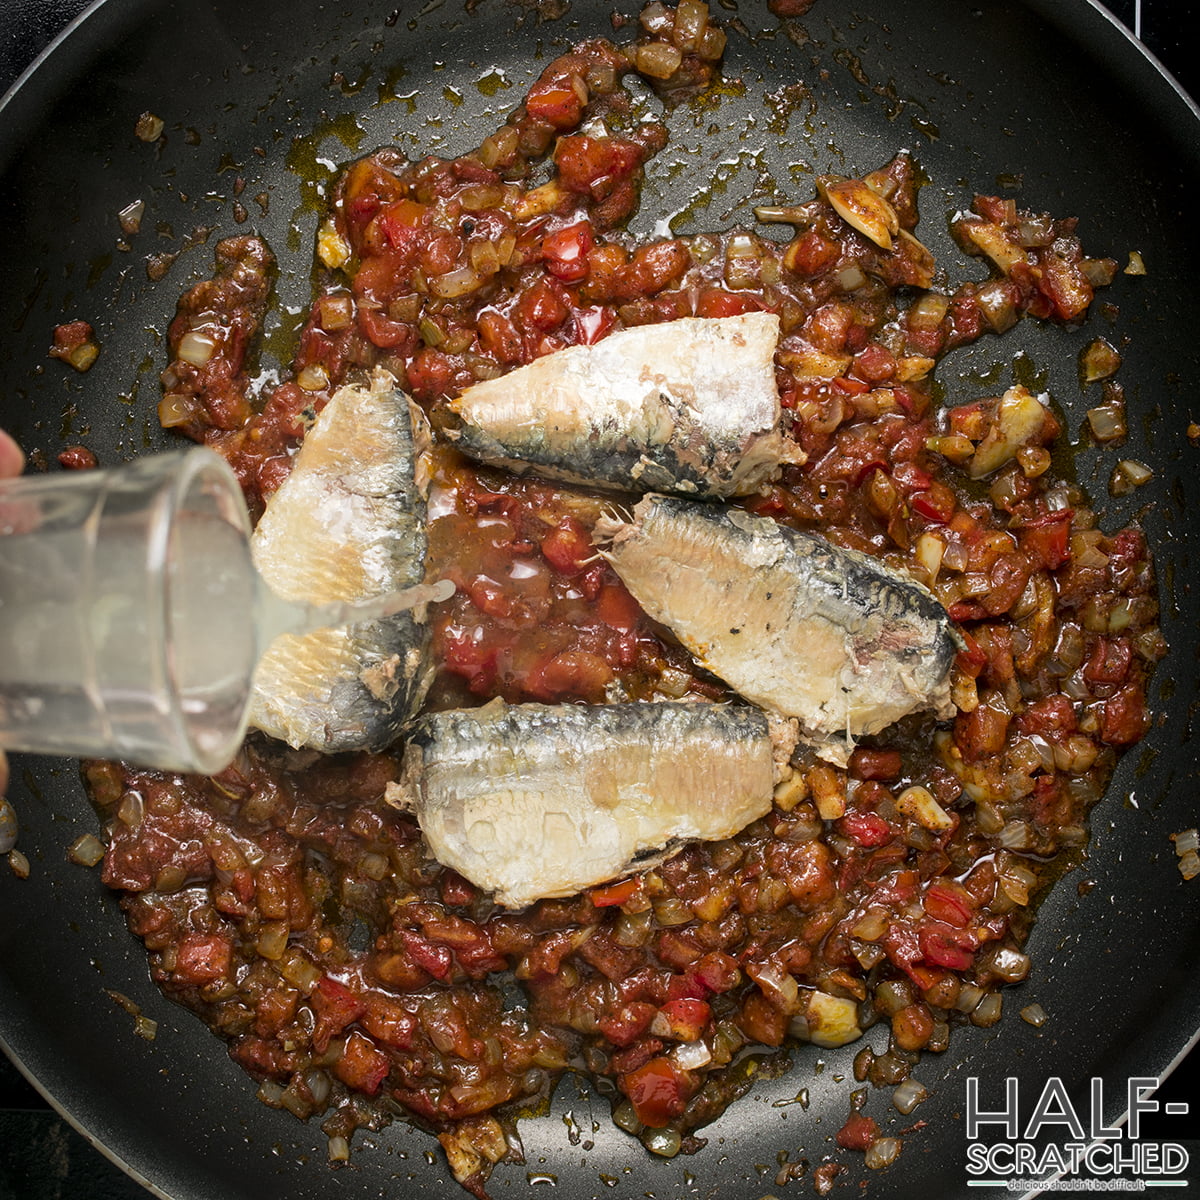 Adding lemon juice to sardines in tomato sauce recipe